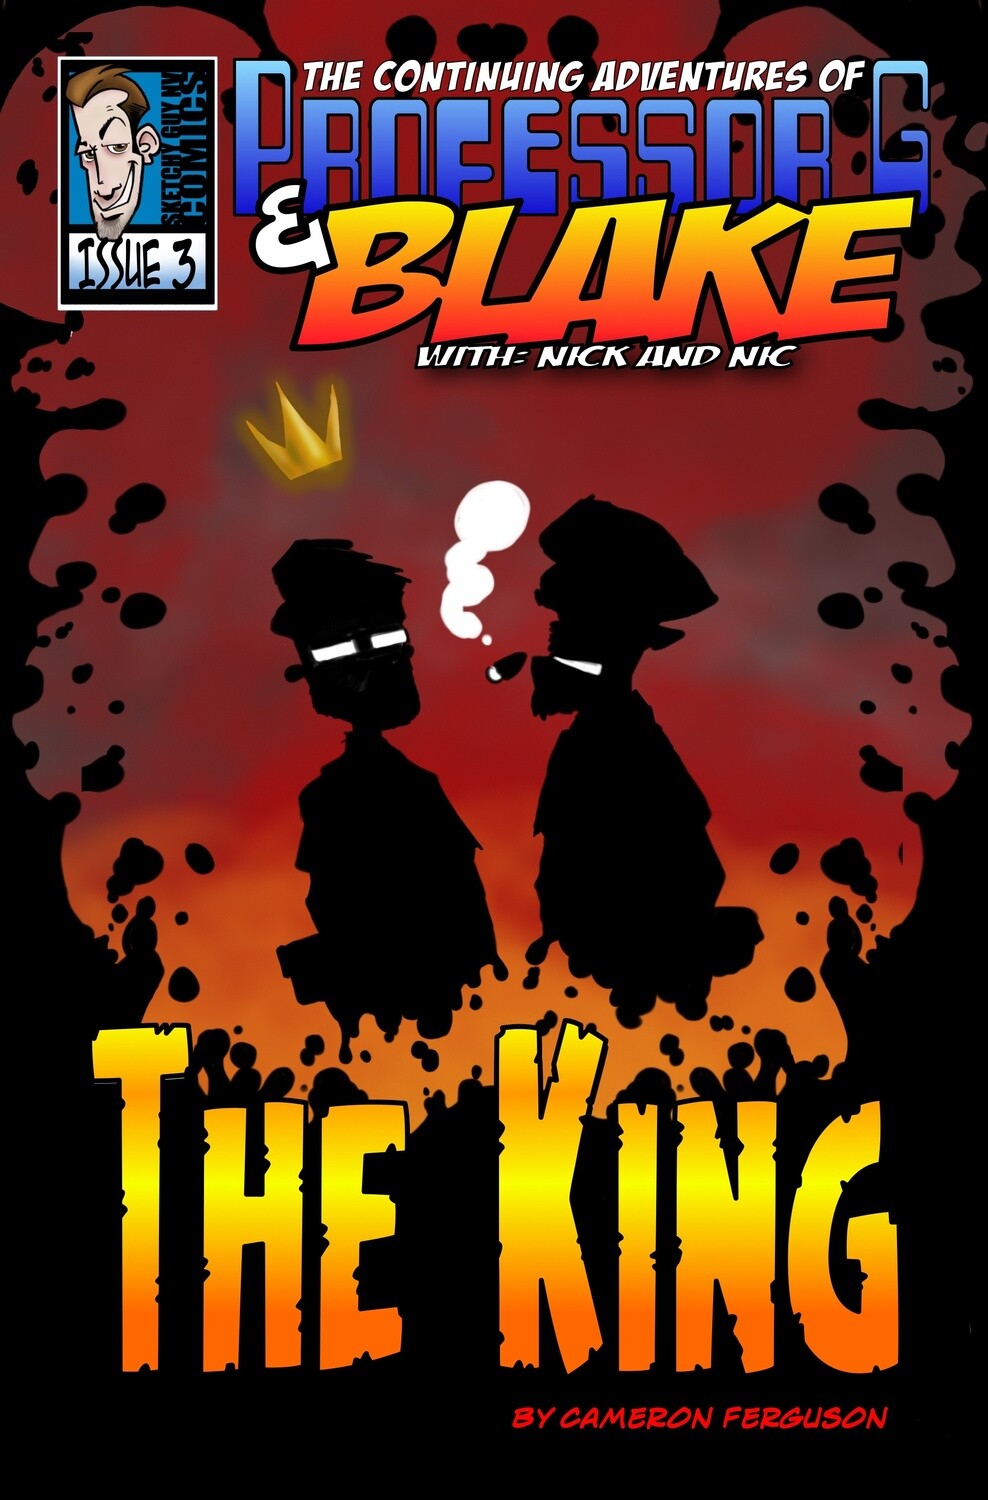 DIGITAL: Professor G and Blake issue 3